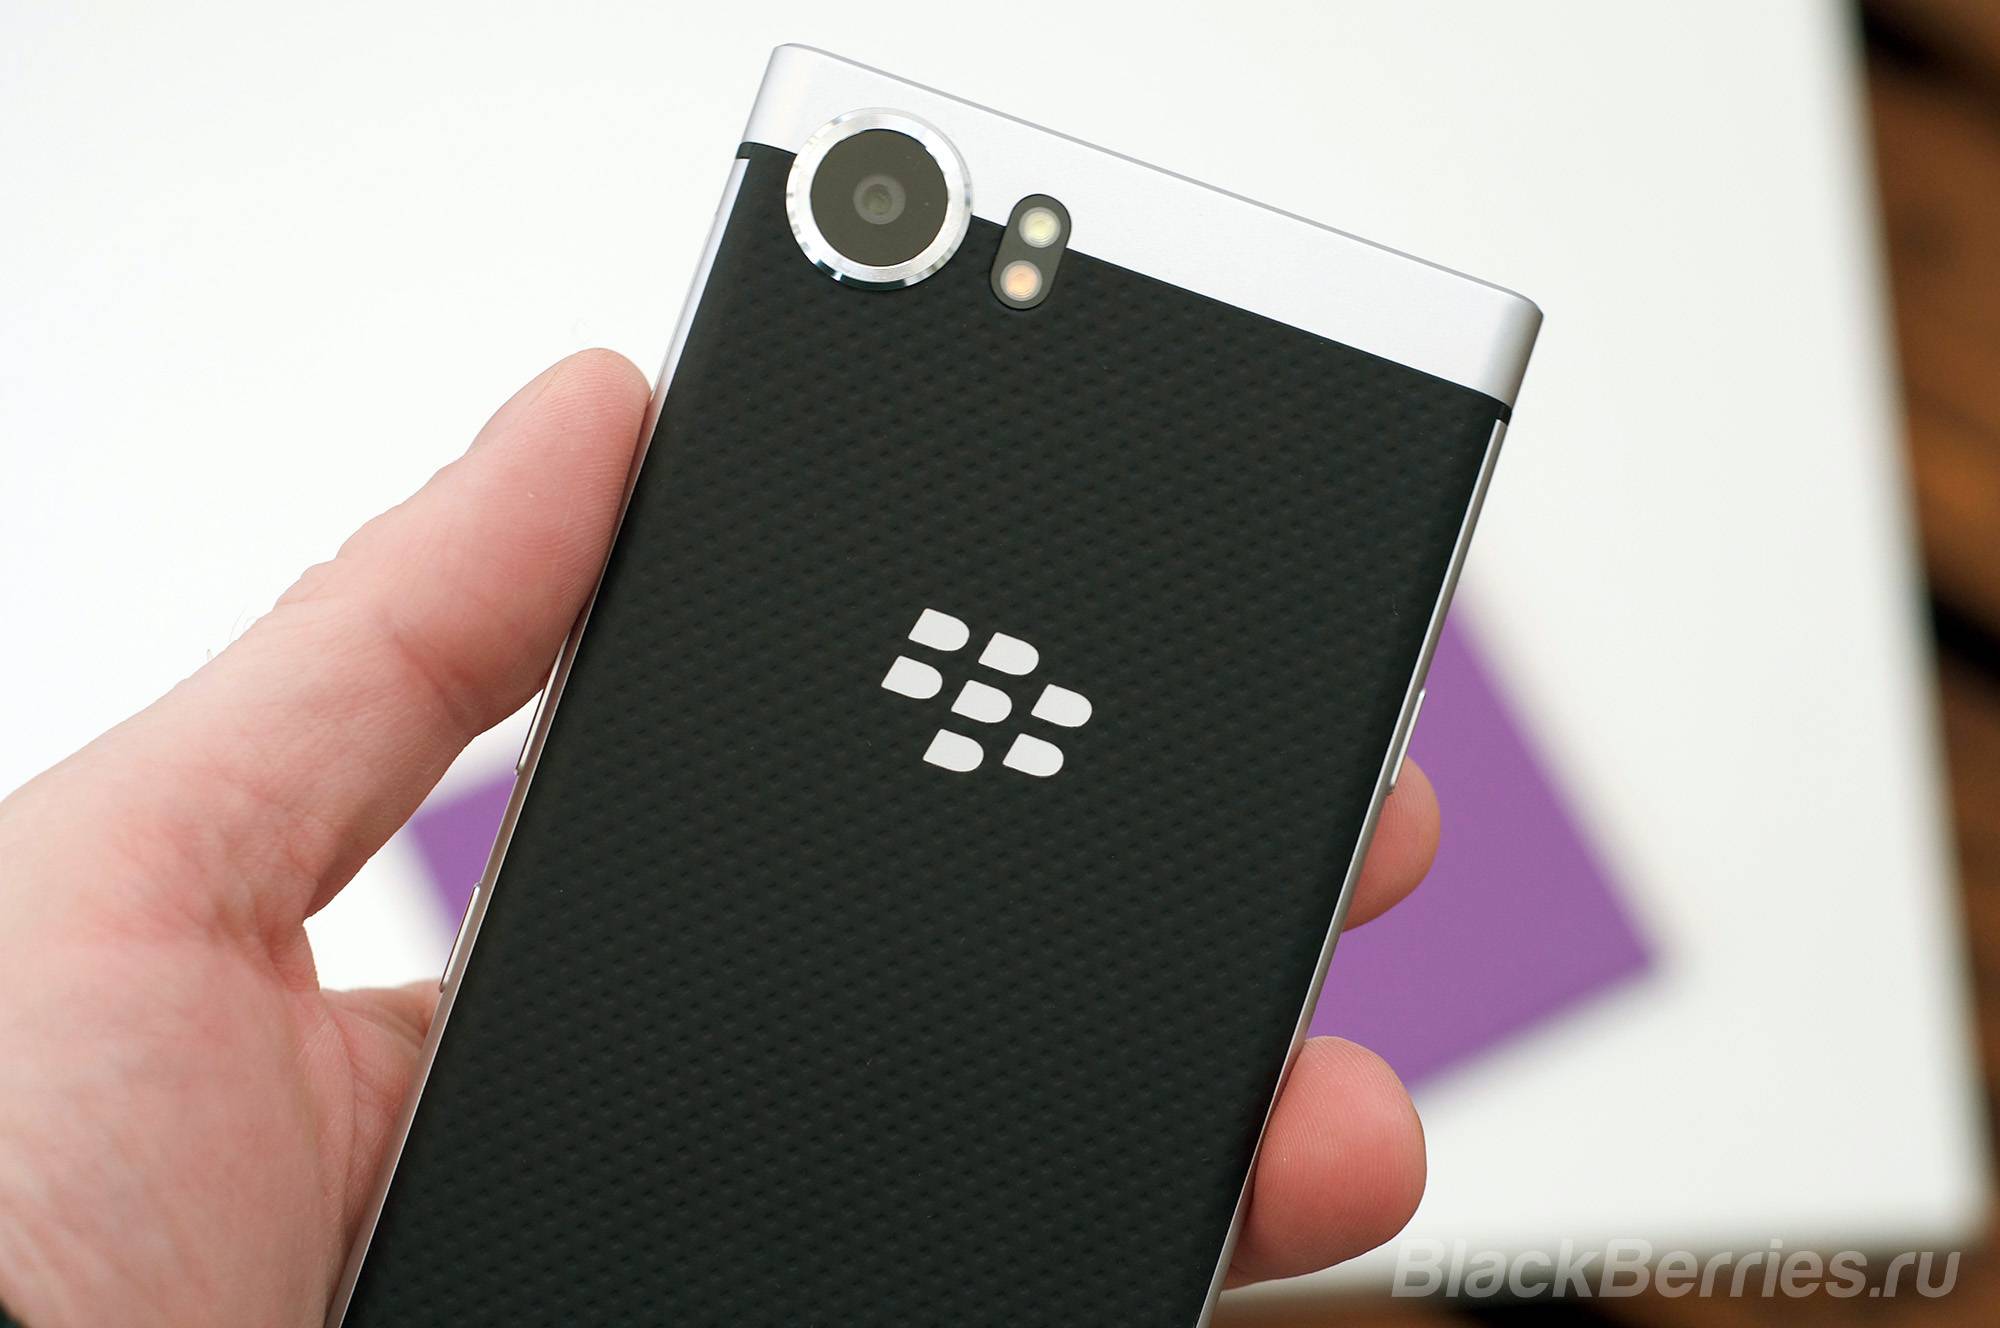 Blackberry keyone: обзор характеристик и возможностей